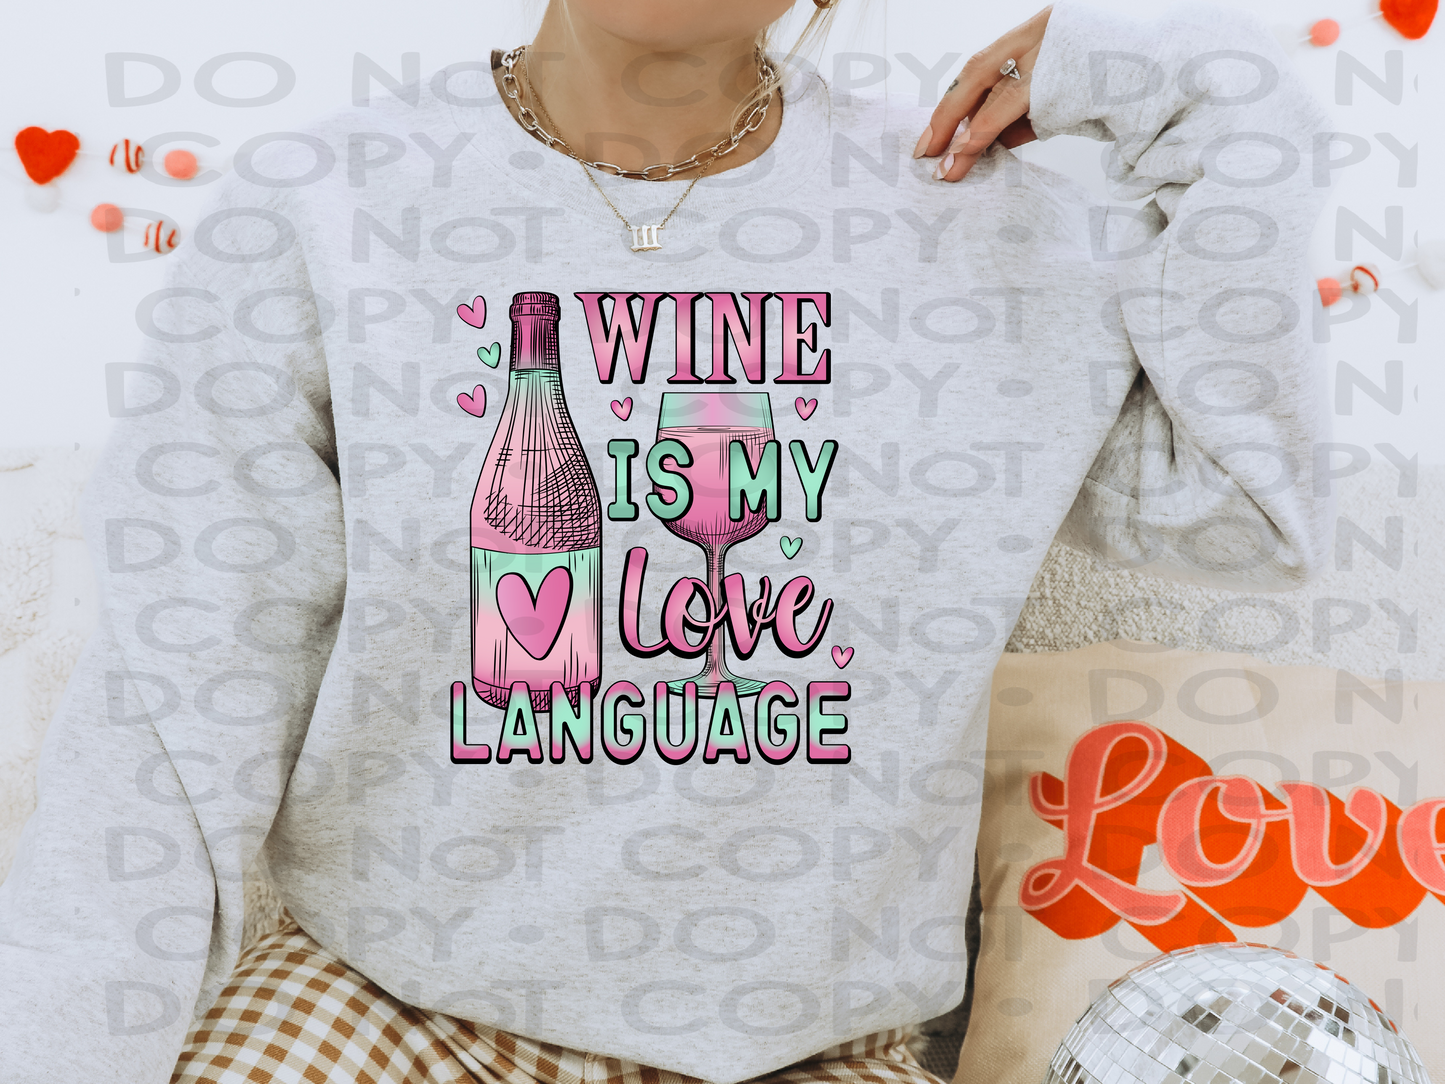 Wine is my love language - DTF